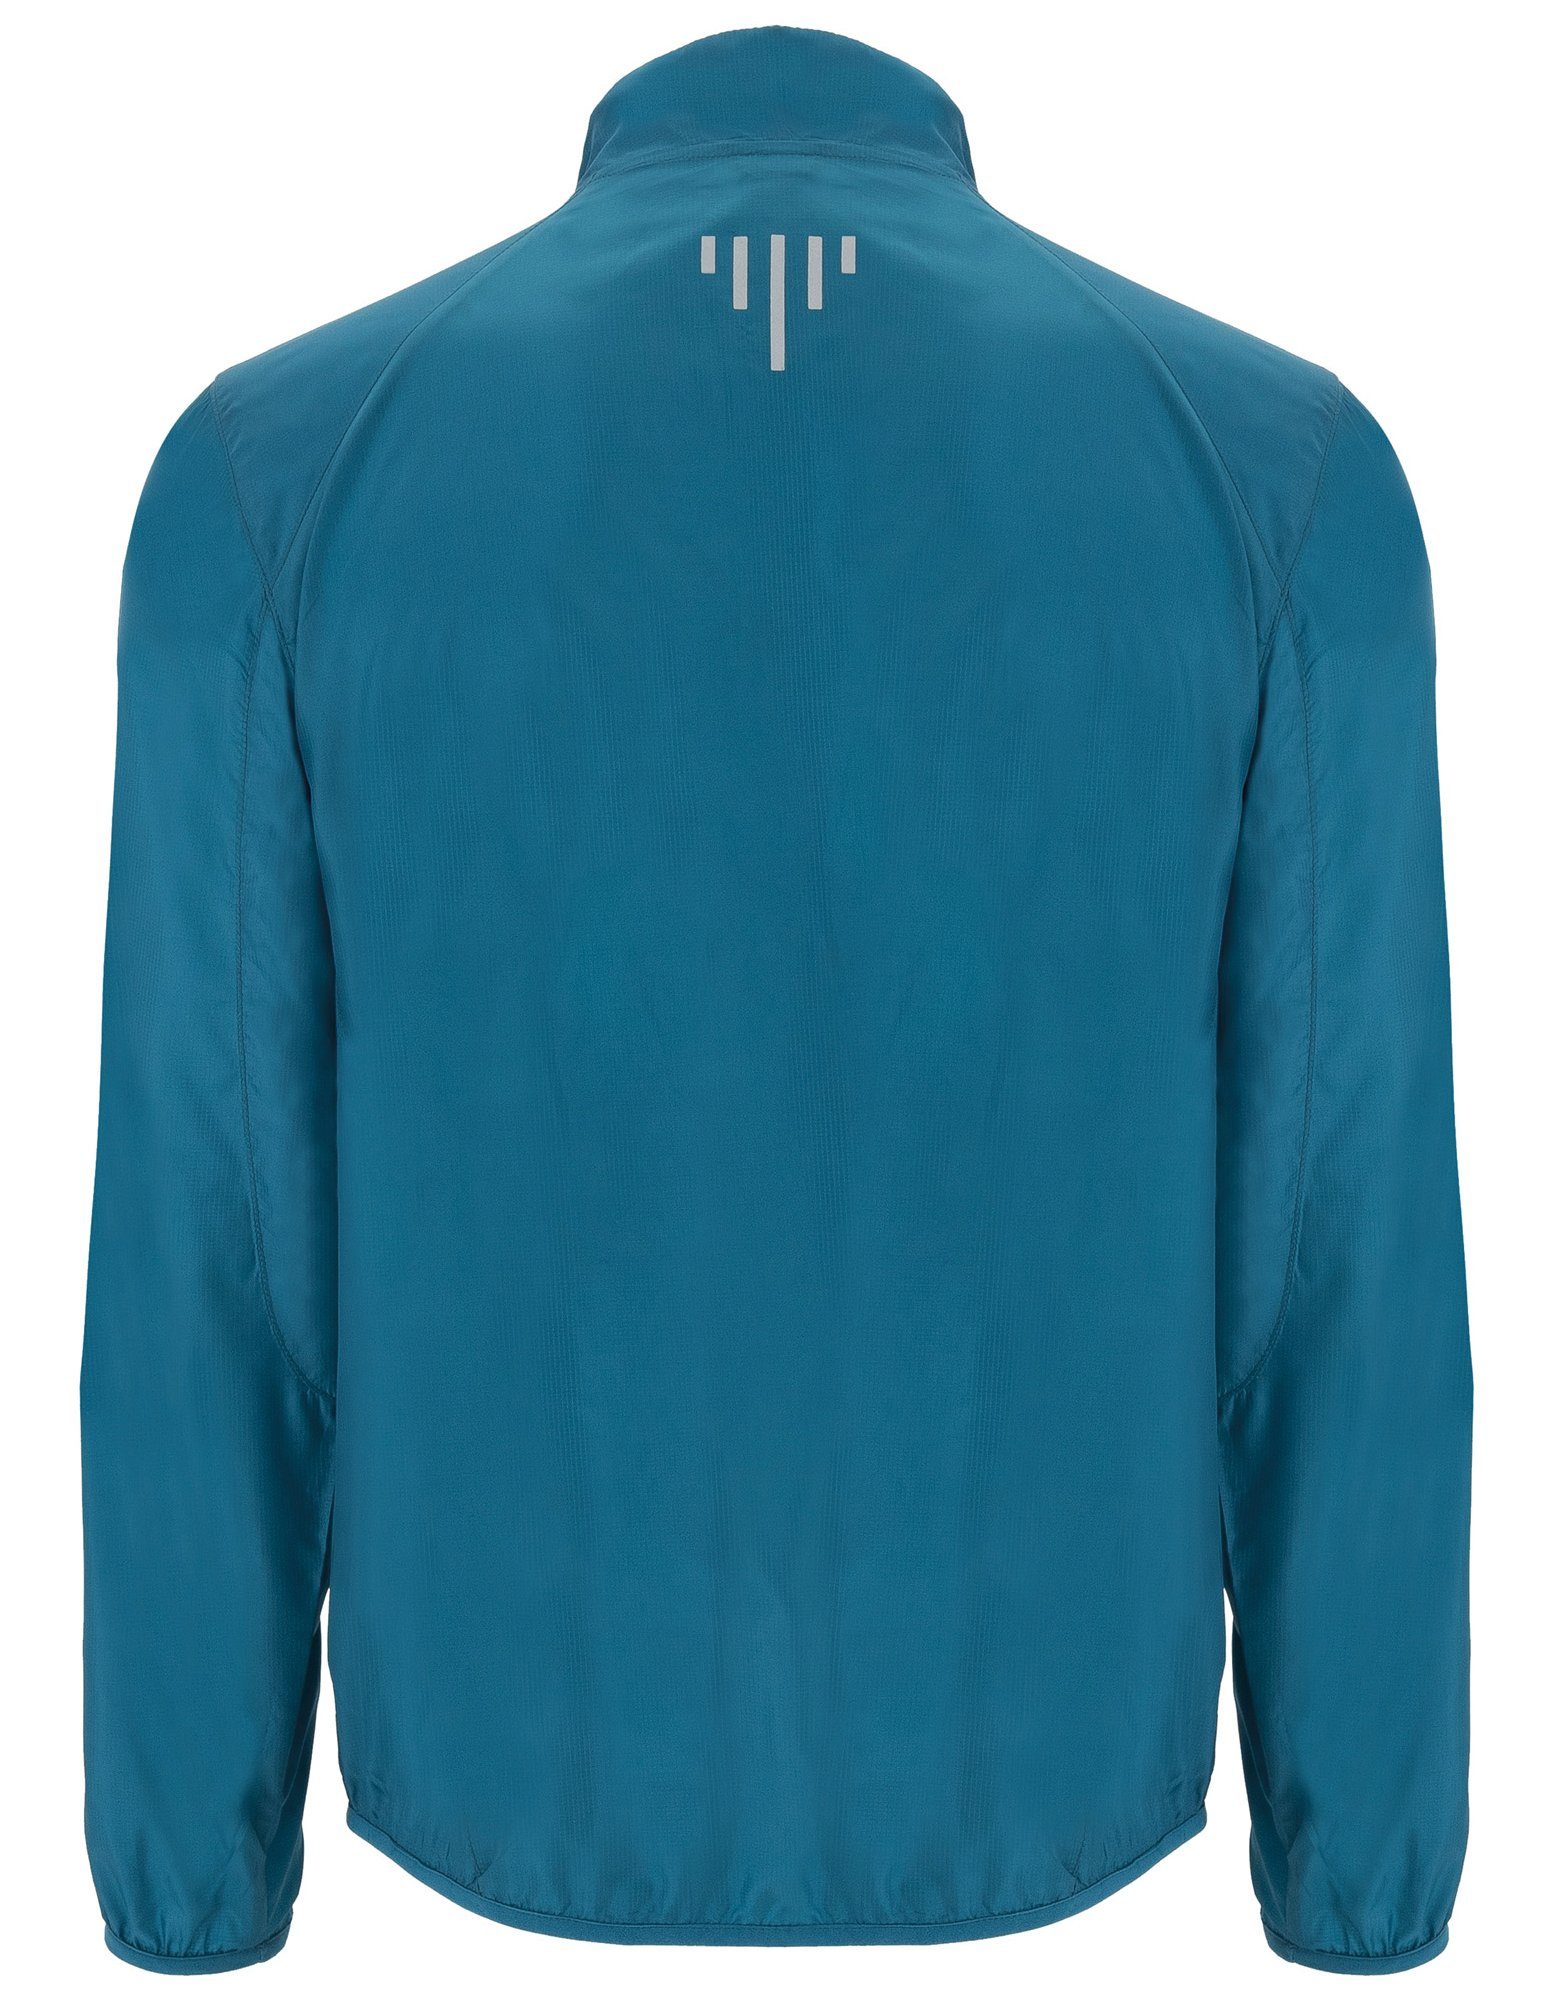 Roly Windbreaker Ultra-Leichte Windjacke wasserabweisend, atmungsaktive Blau Herren Royal reflektierend, Sportjacke windabweisend 